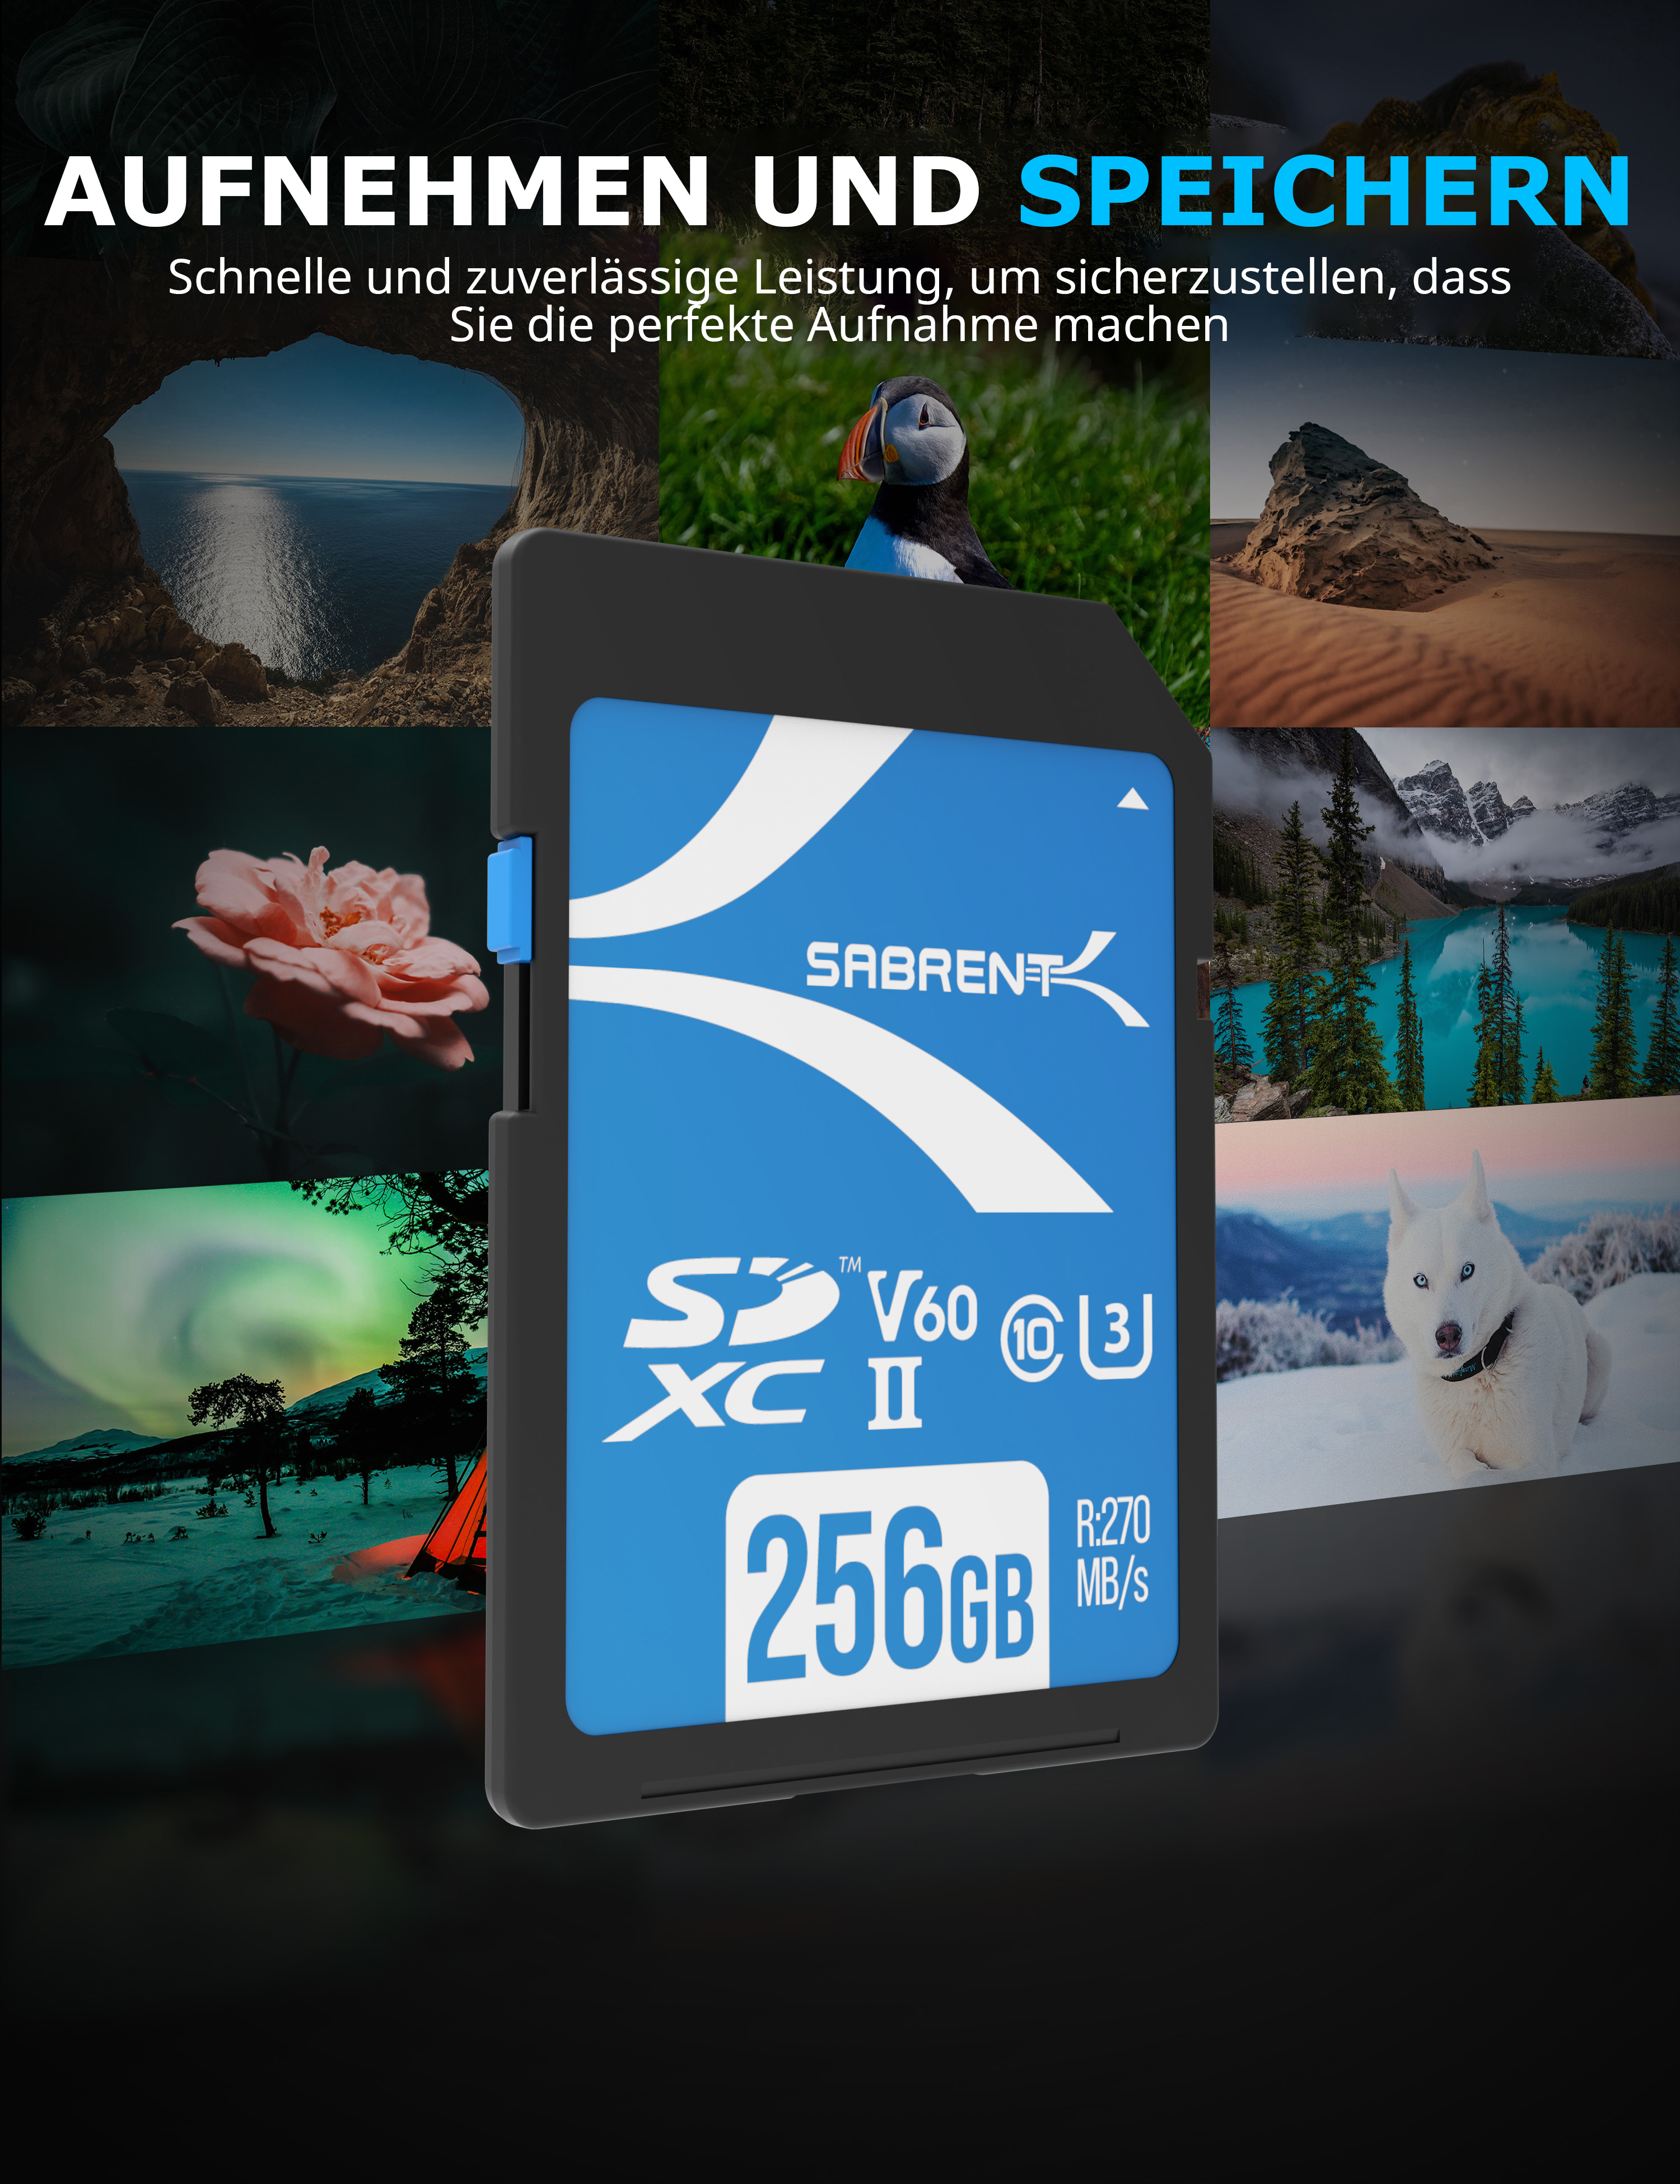 256GB V60 SDXC GB, 256 UHS-II, 270 SD MB/s Karte, SD SABRENT